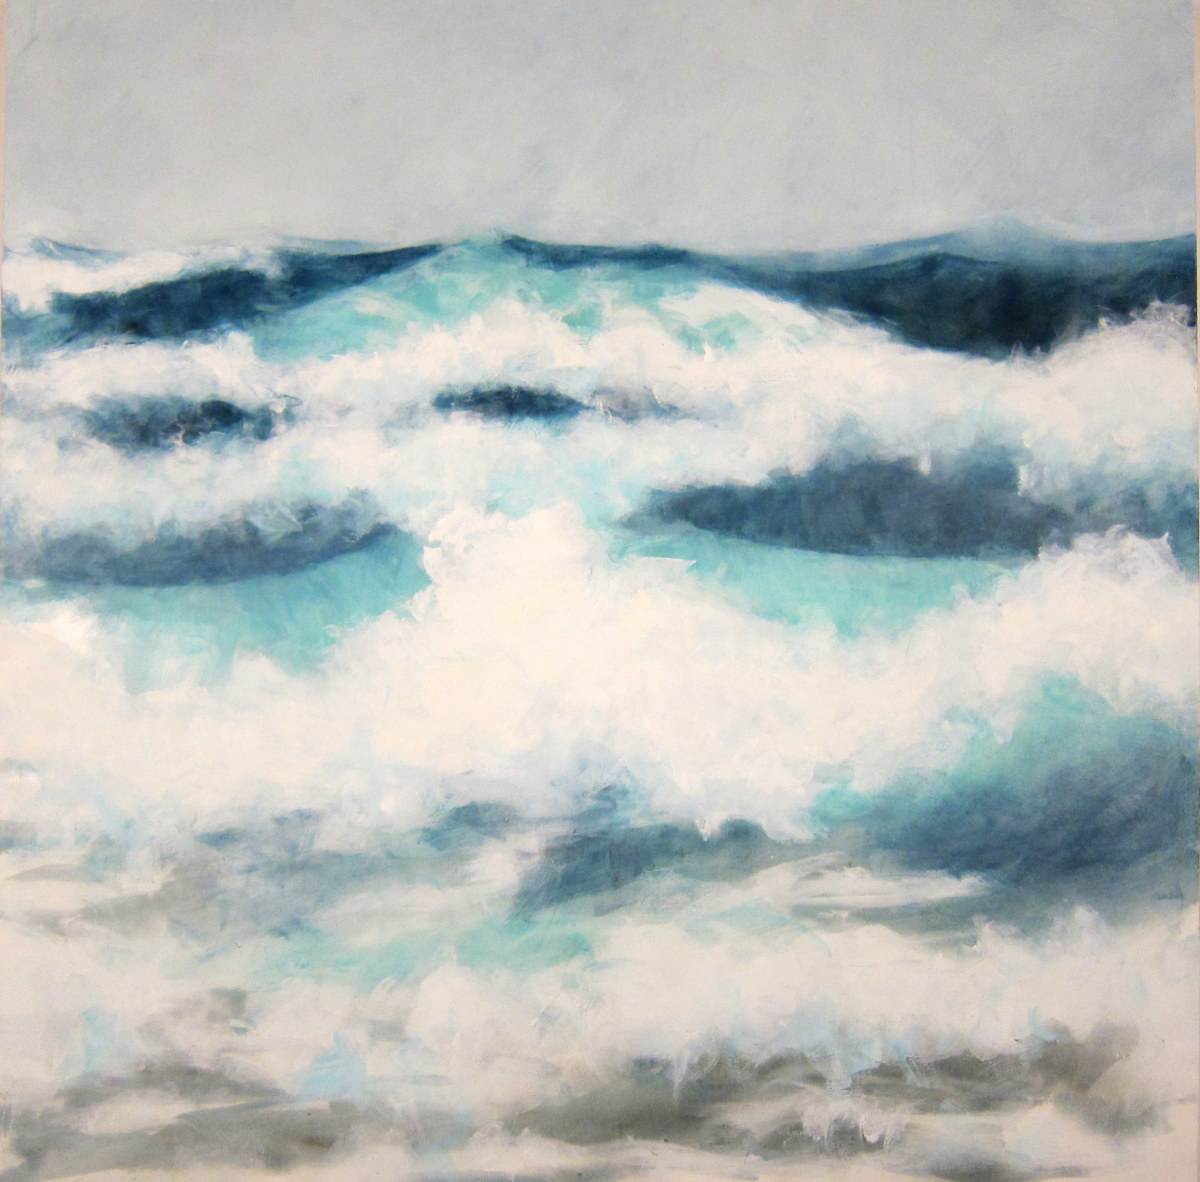 Sea Sky Series: Churn by Krista Machovina 